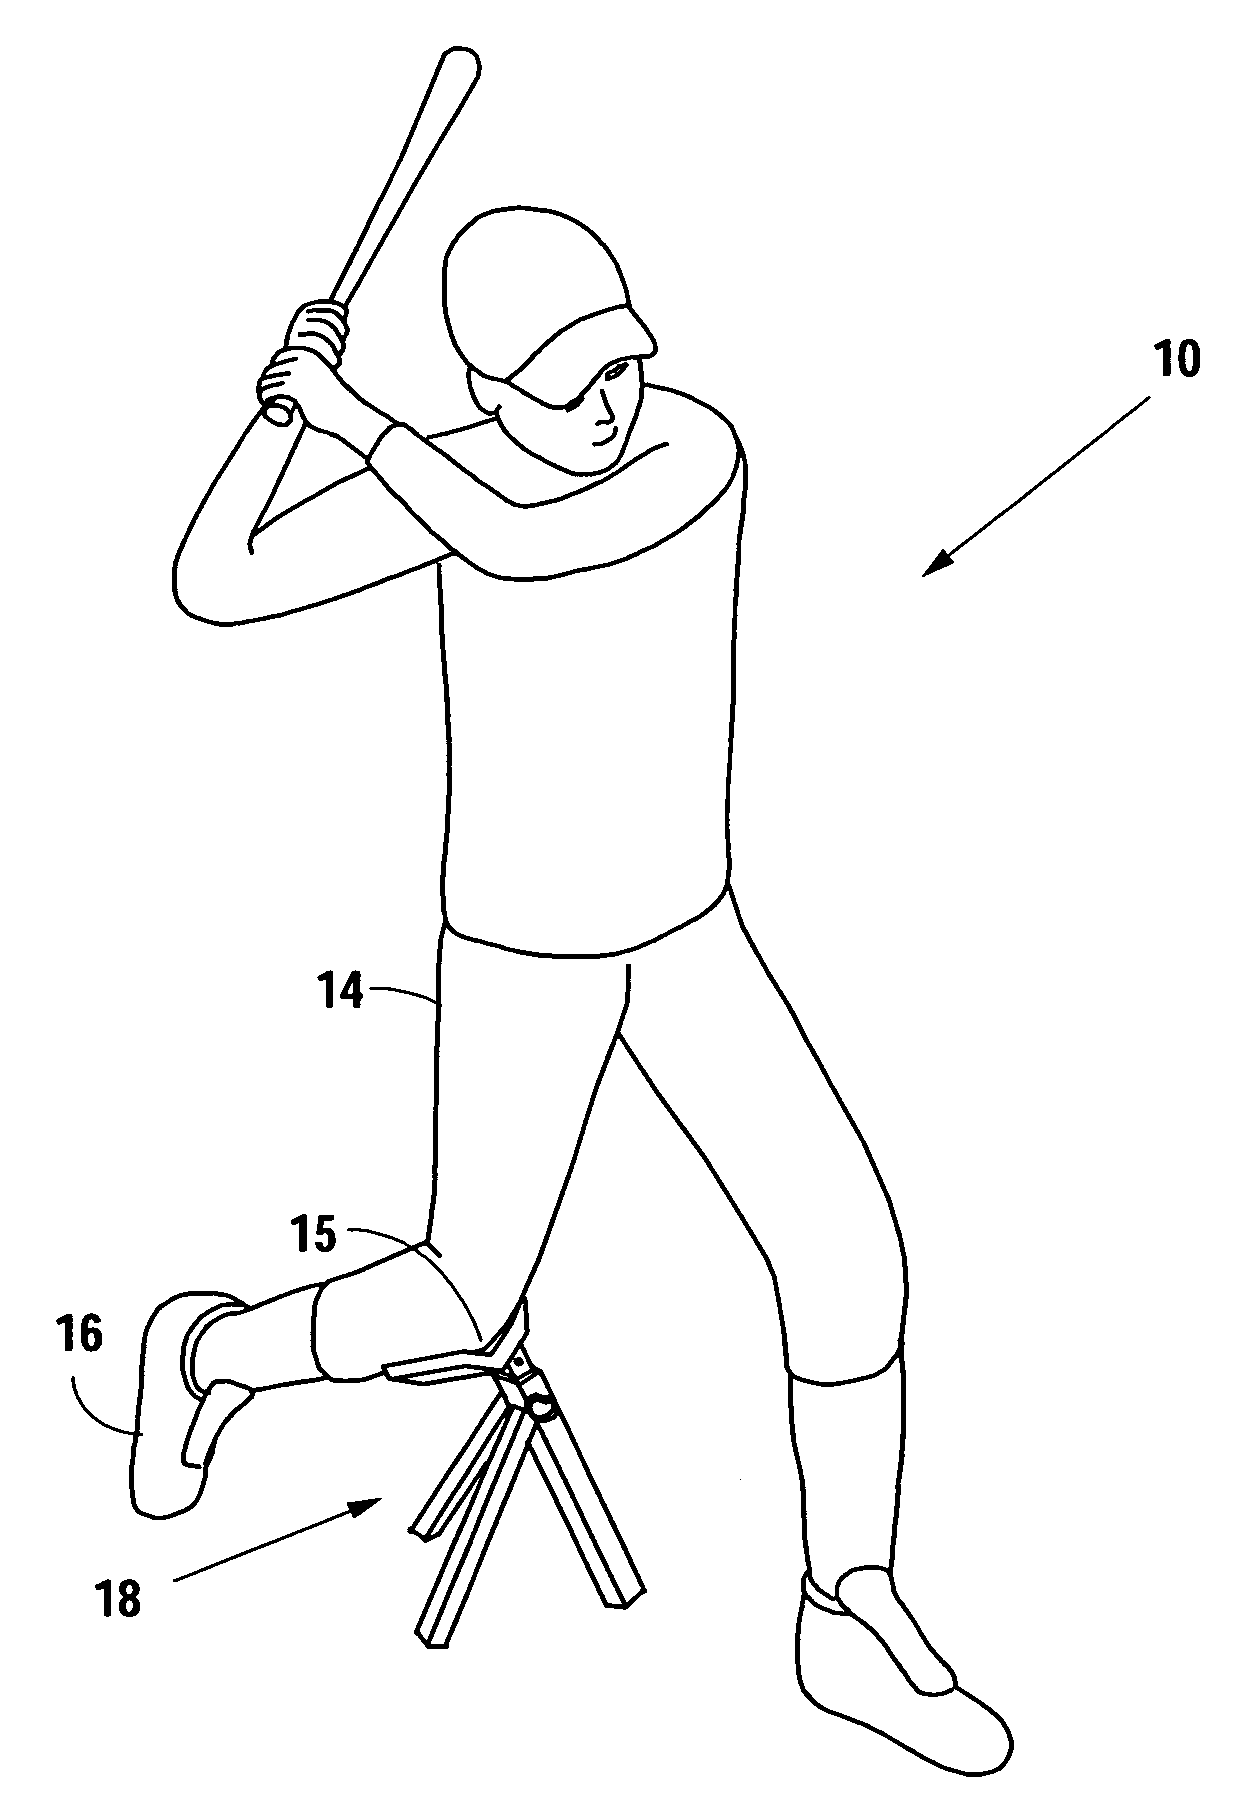 Sports swing training apparatus and method